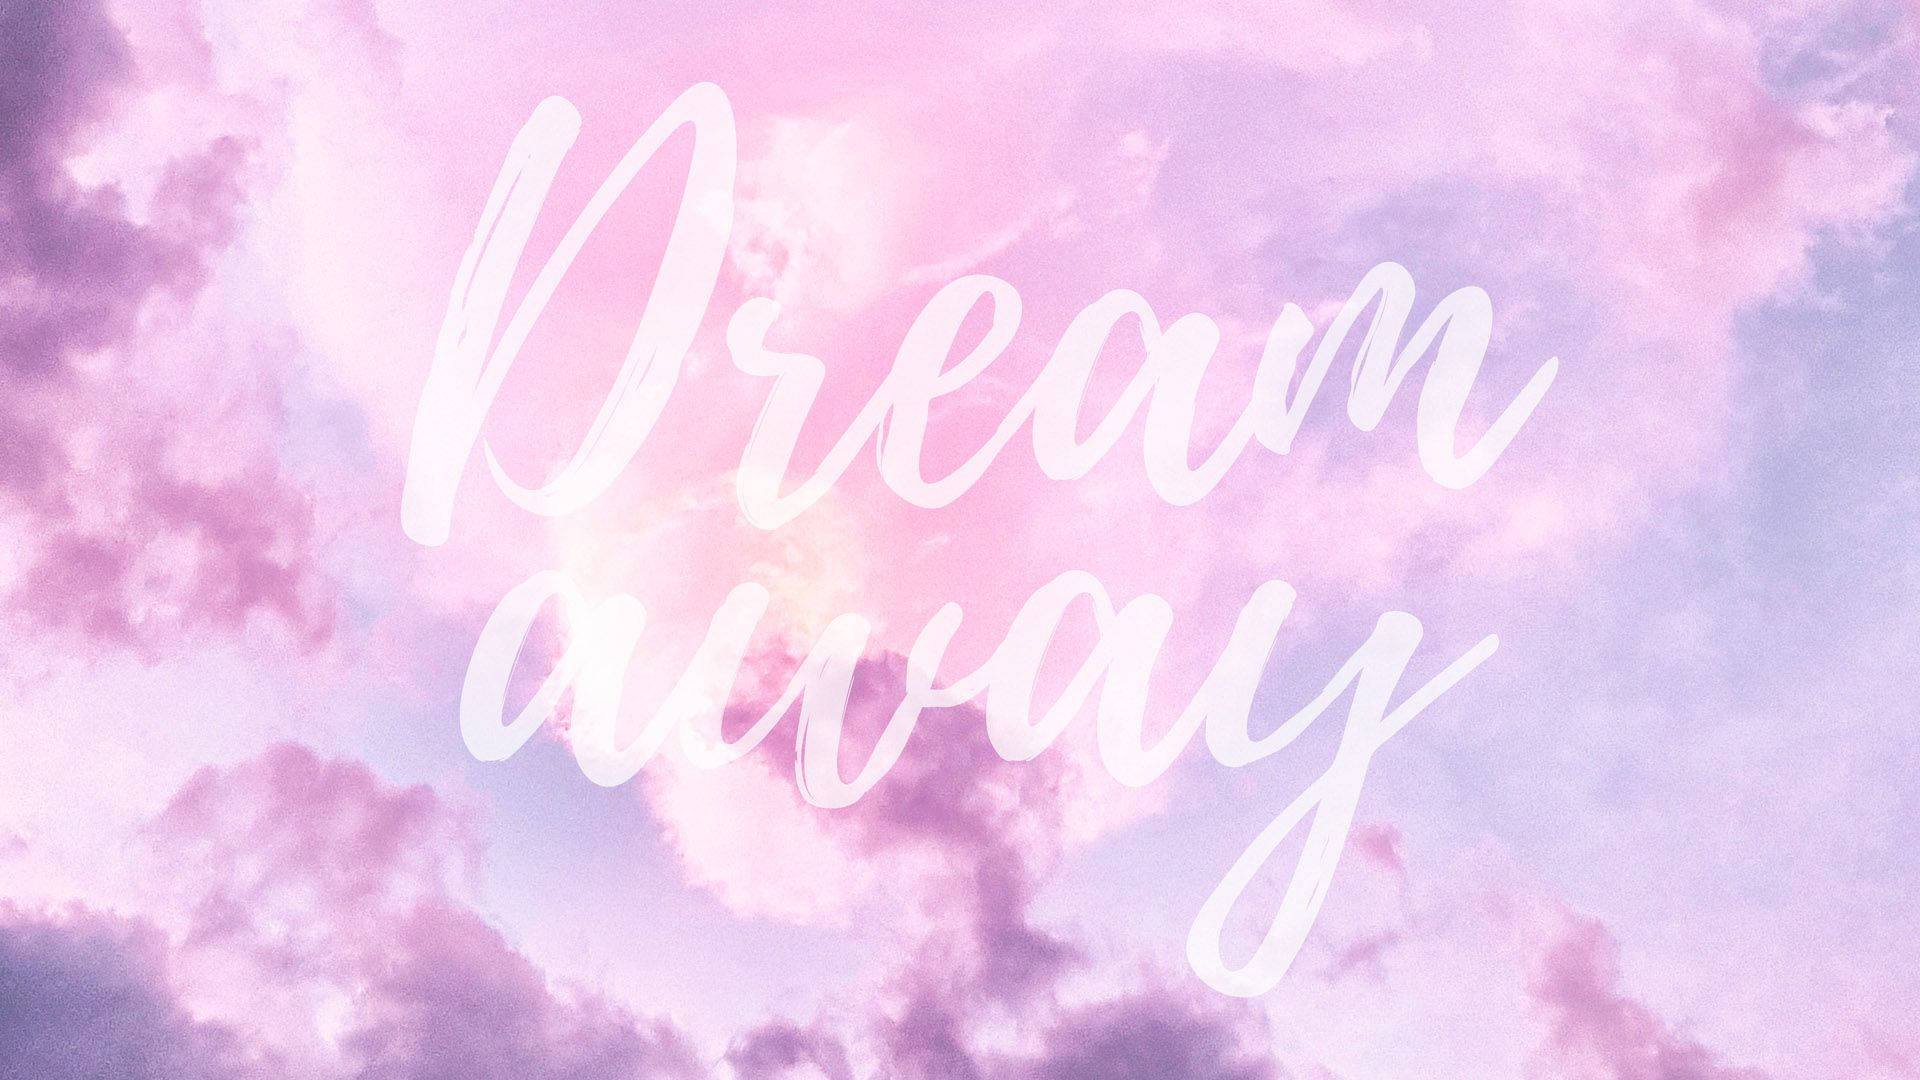 Dream Away Pastel Desktop Wallpaper